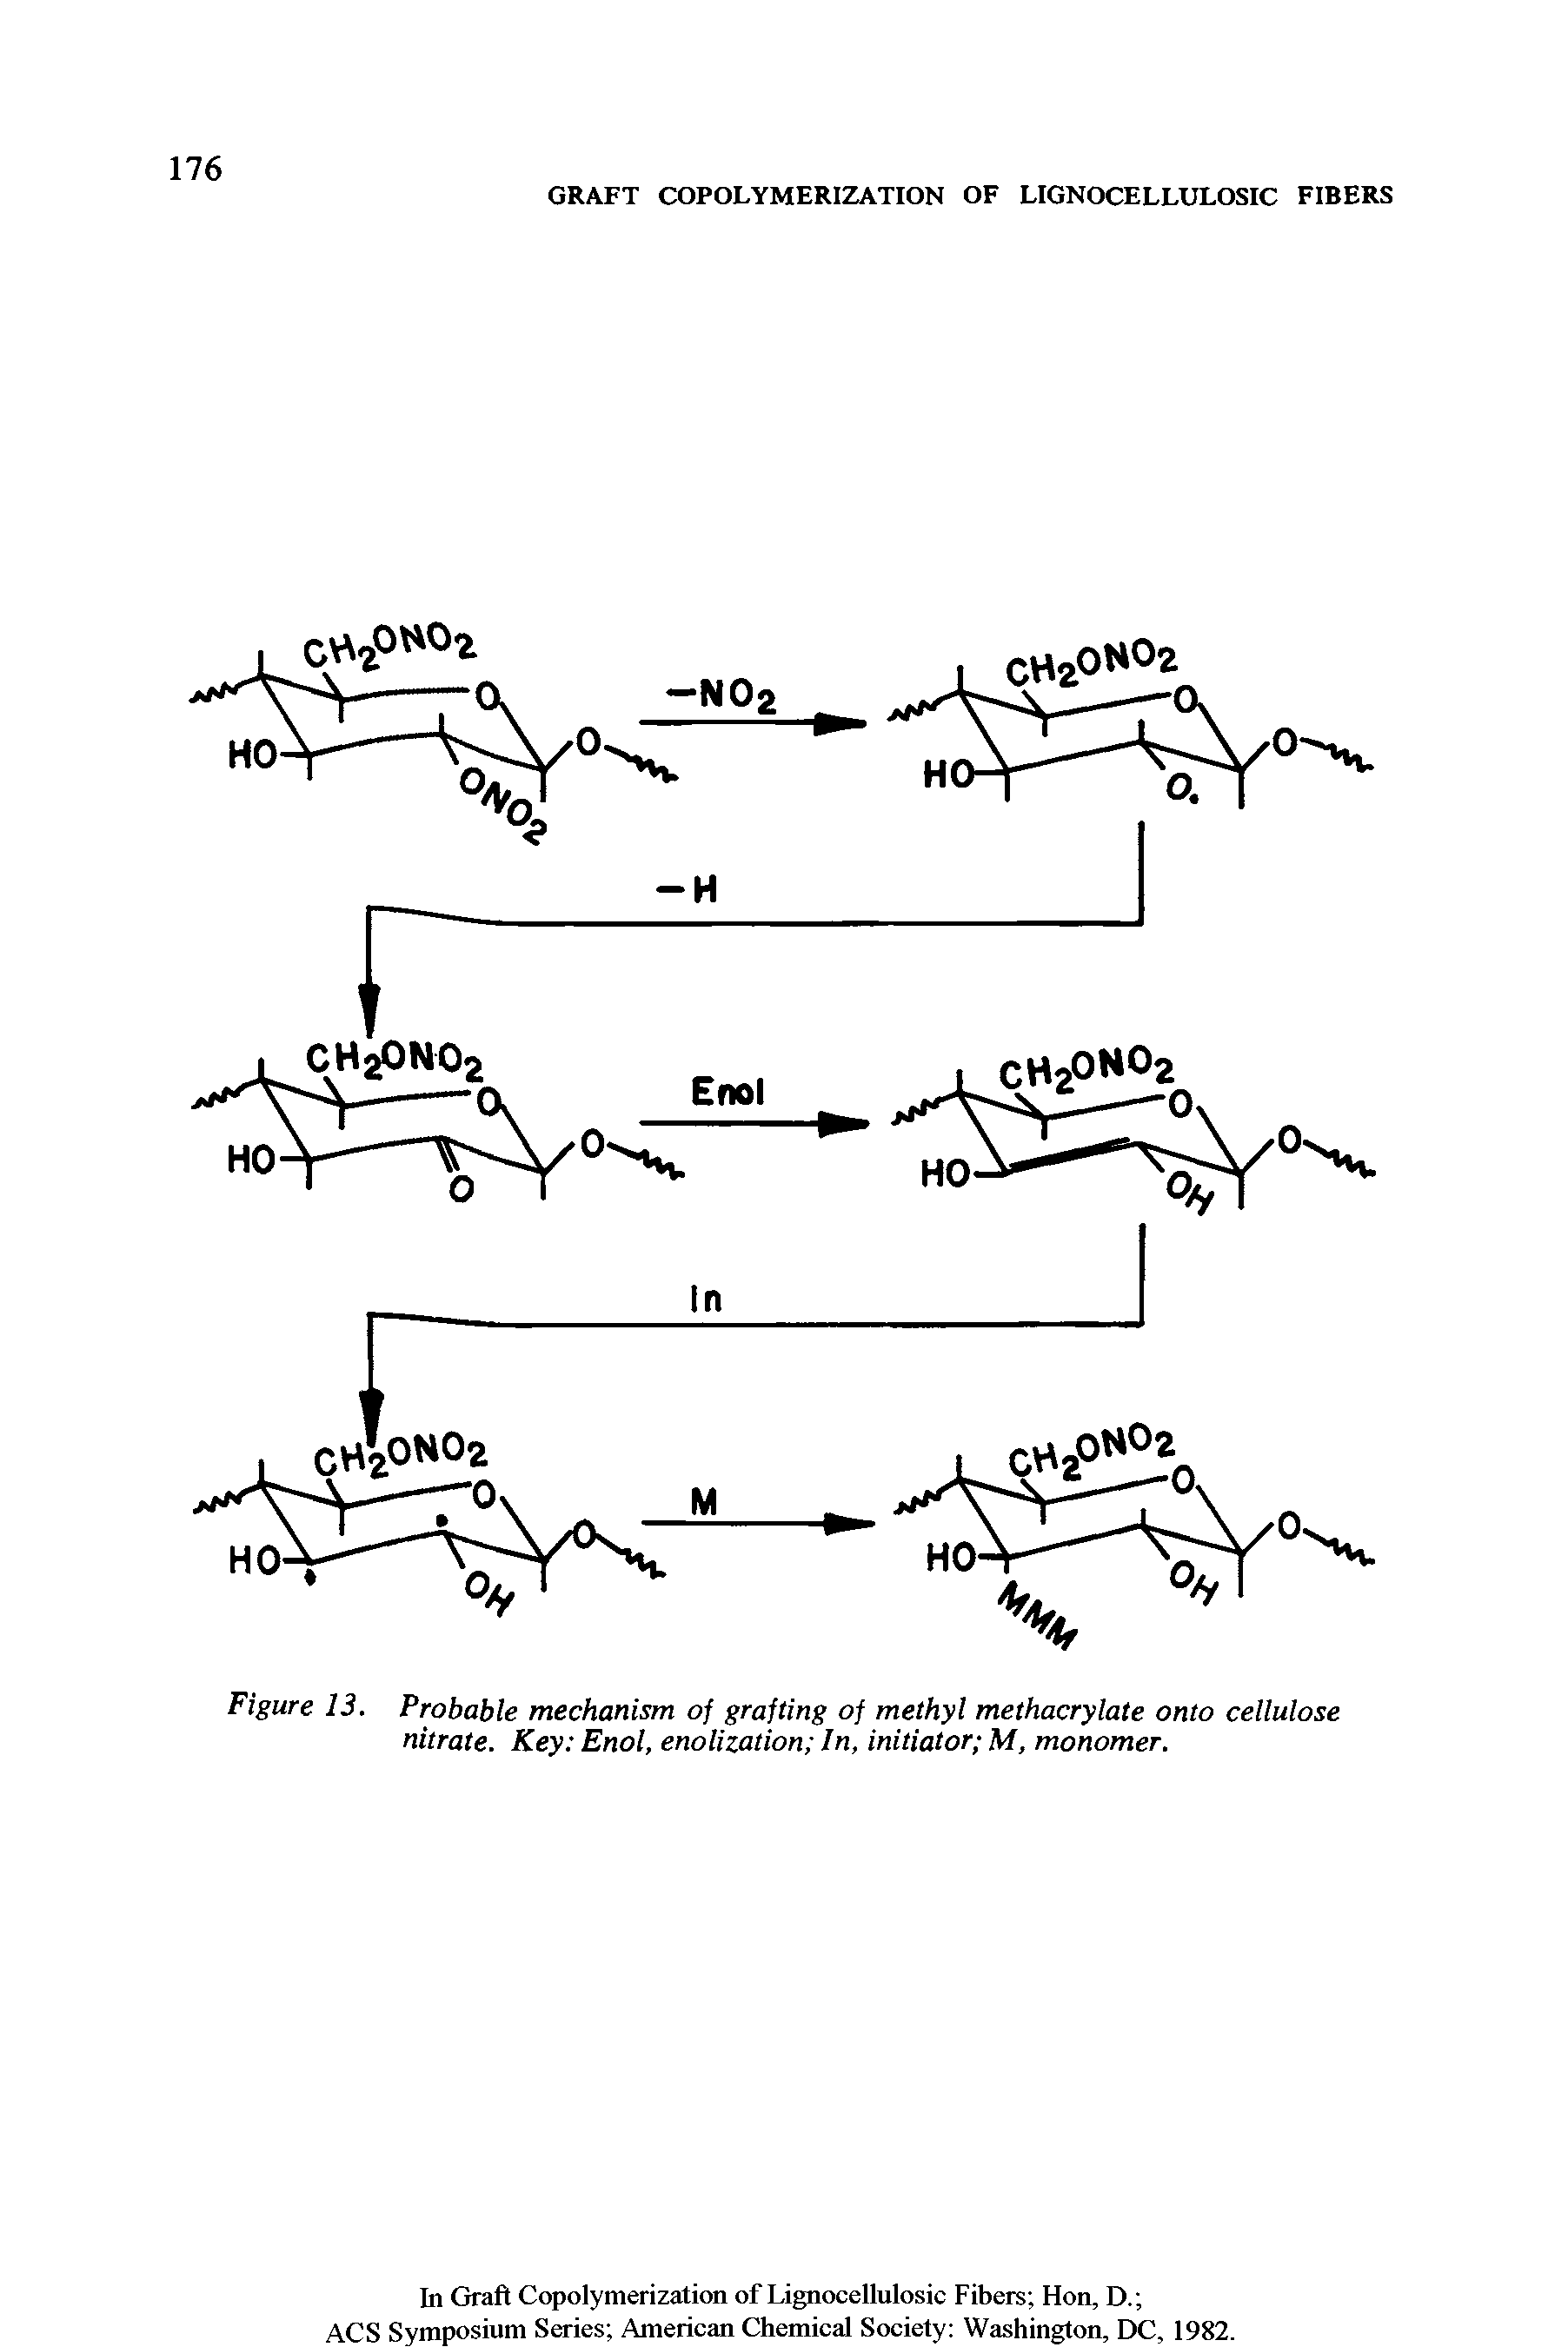 Figure 13. Probable mechanism of grafting of methyl methacrylate onto cellulose nitrate. Key Enol, enolization In, initiator M, monomer.